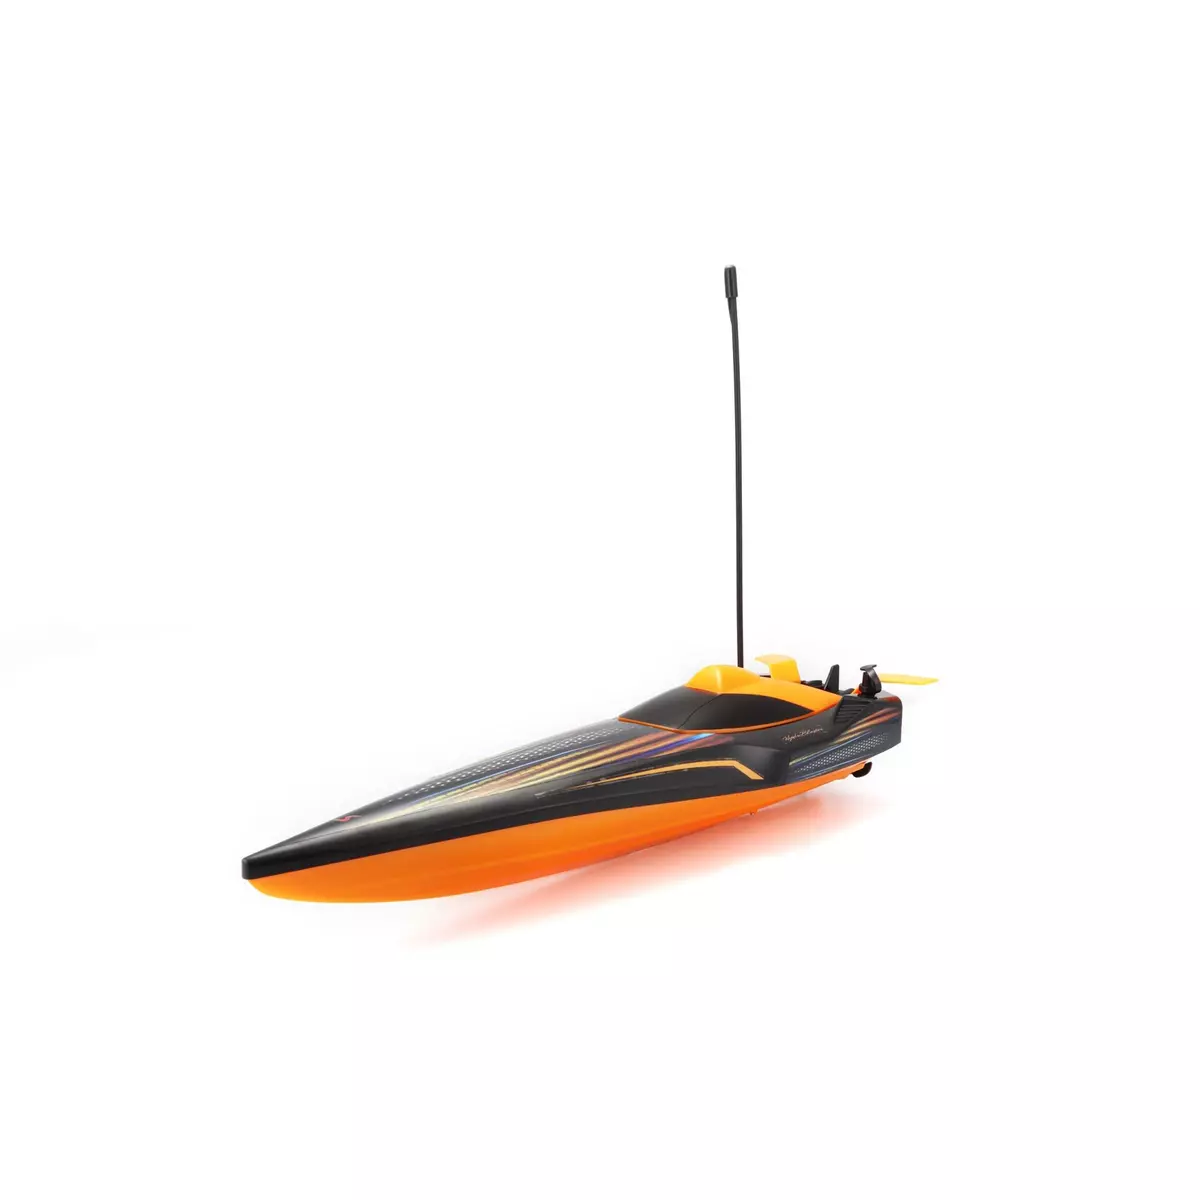 BURAGO Maisto Tech - Bateau radiocommandé Hydro Blaster orange et noir